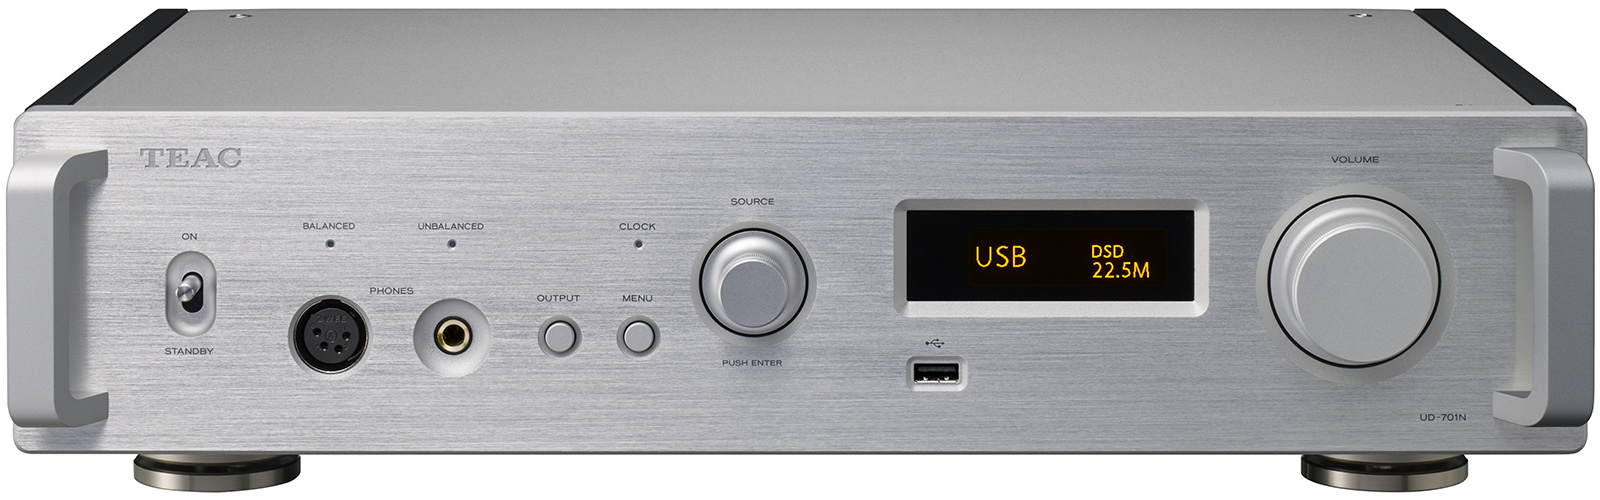 Сетевые аудио проигрыватели Teac UD-701N silver сетевые аудио проигрыватели cen grand 9i 396 4k silver